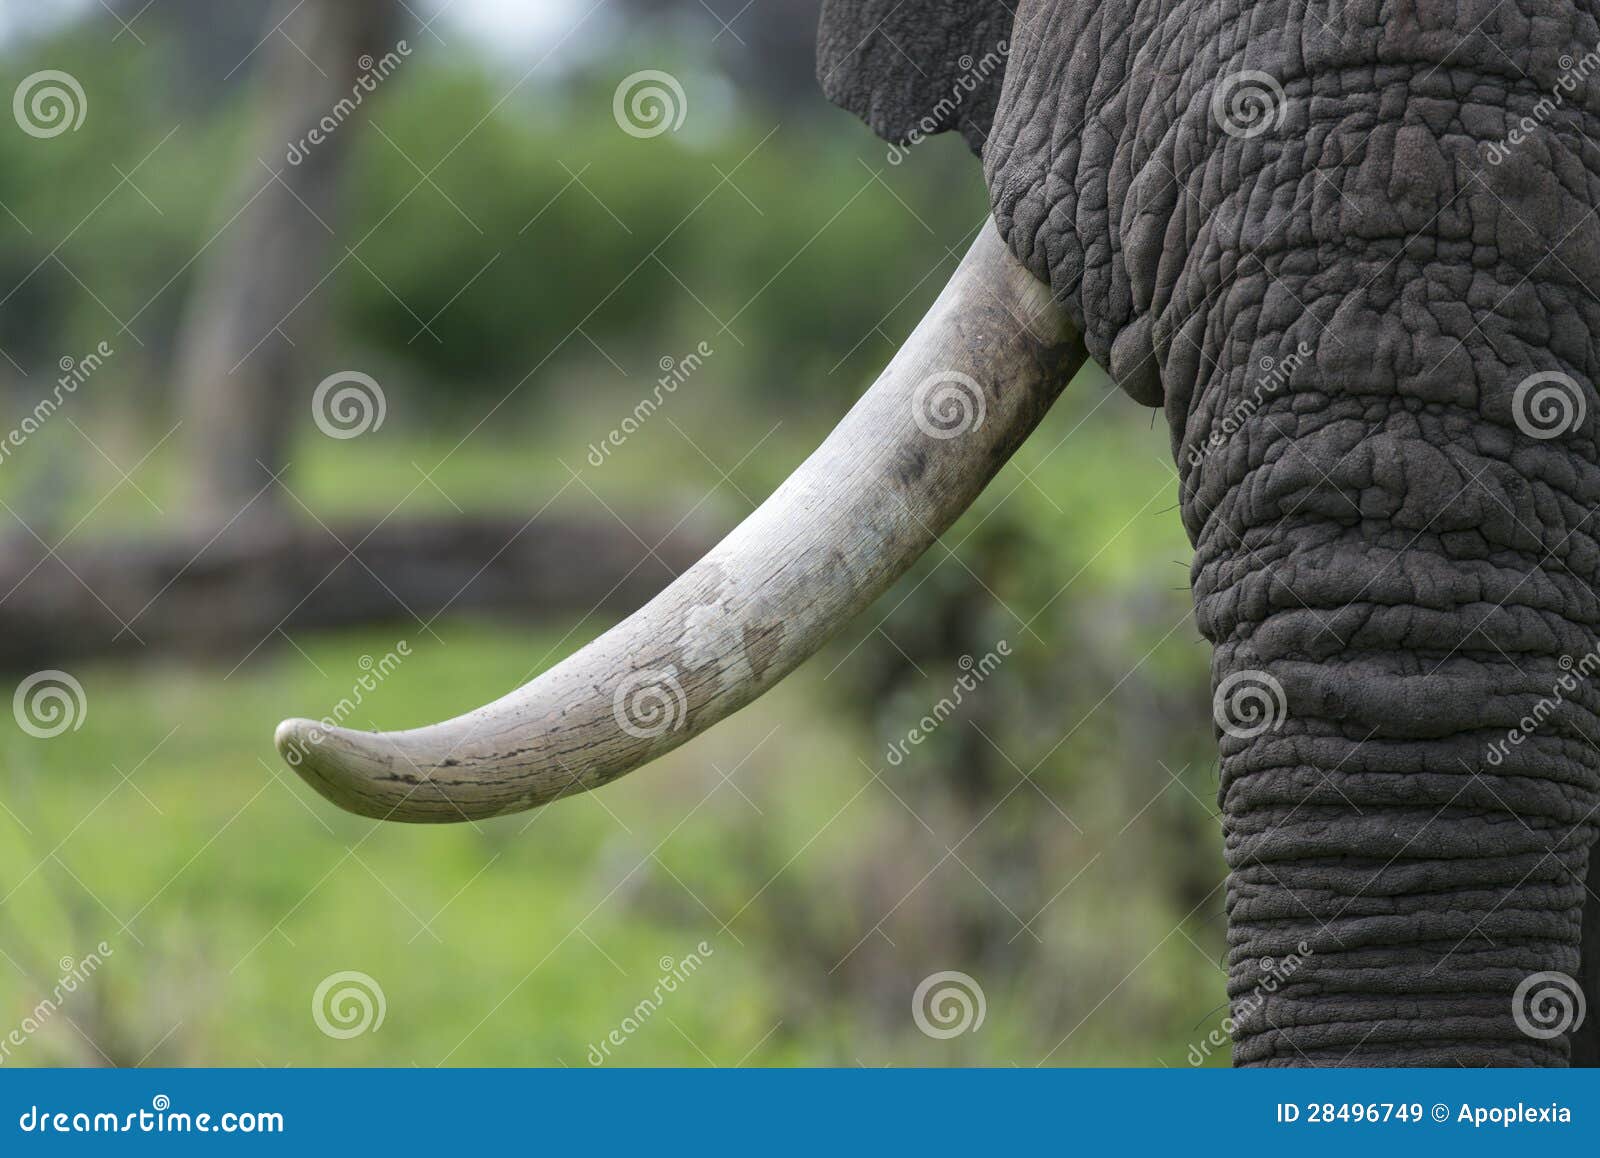 a bull elephant with massive tusks